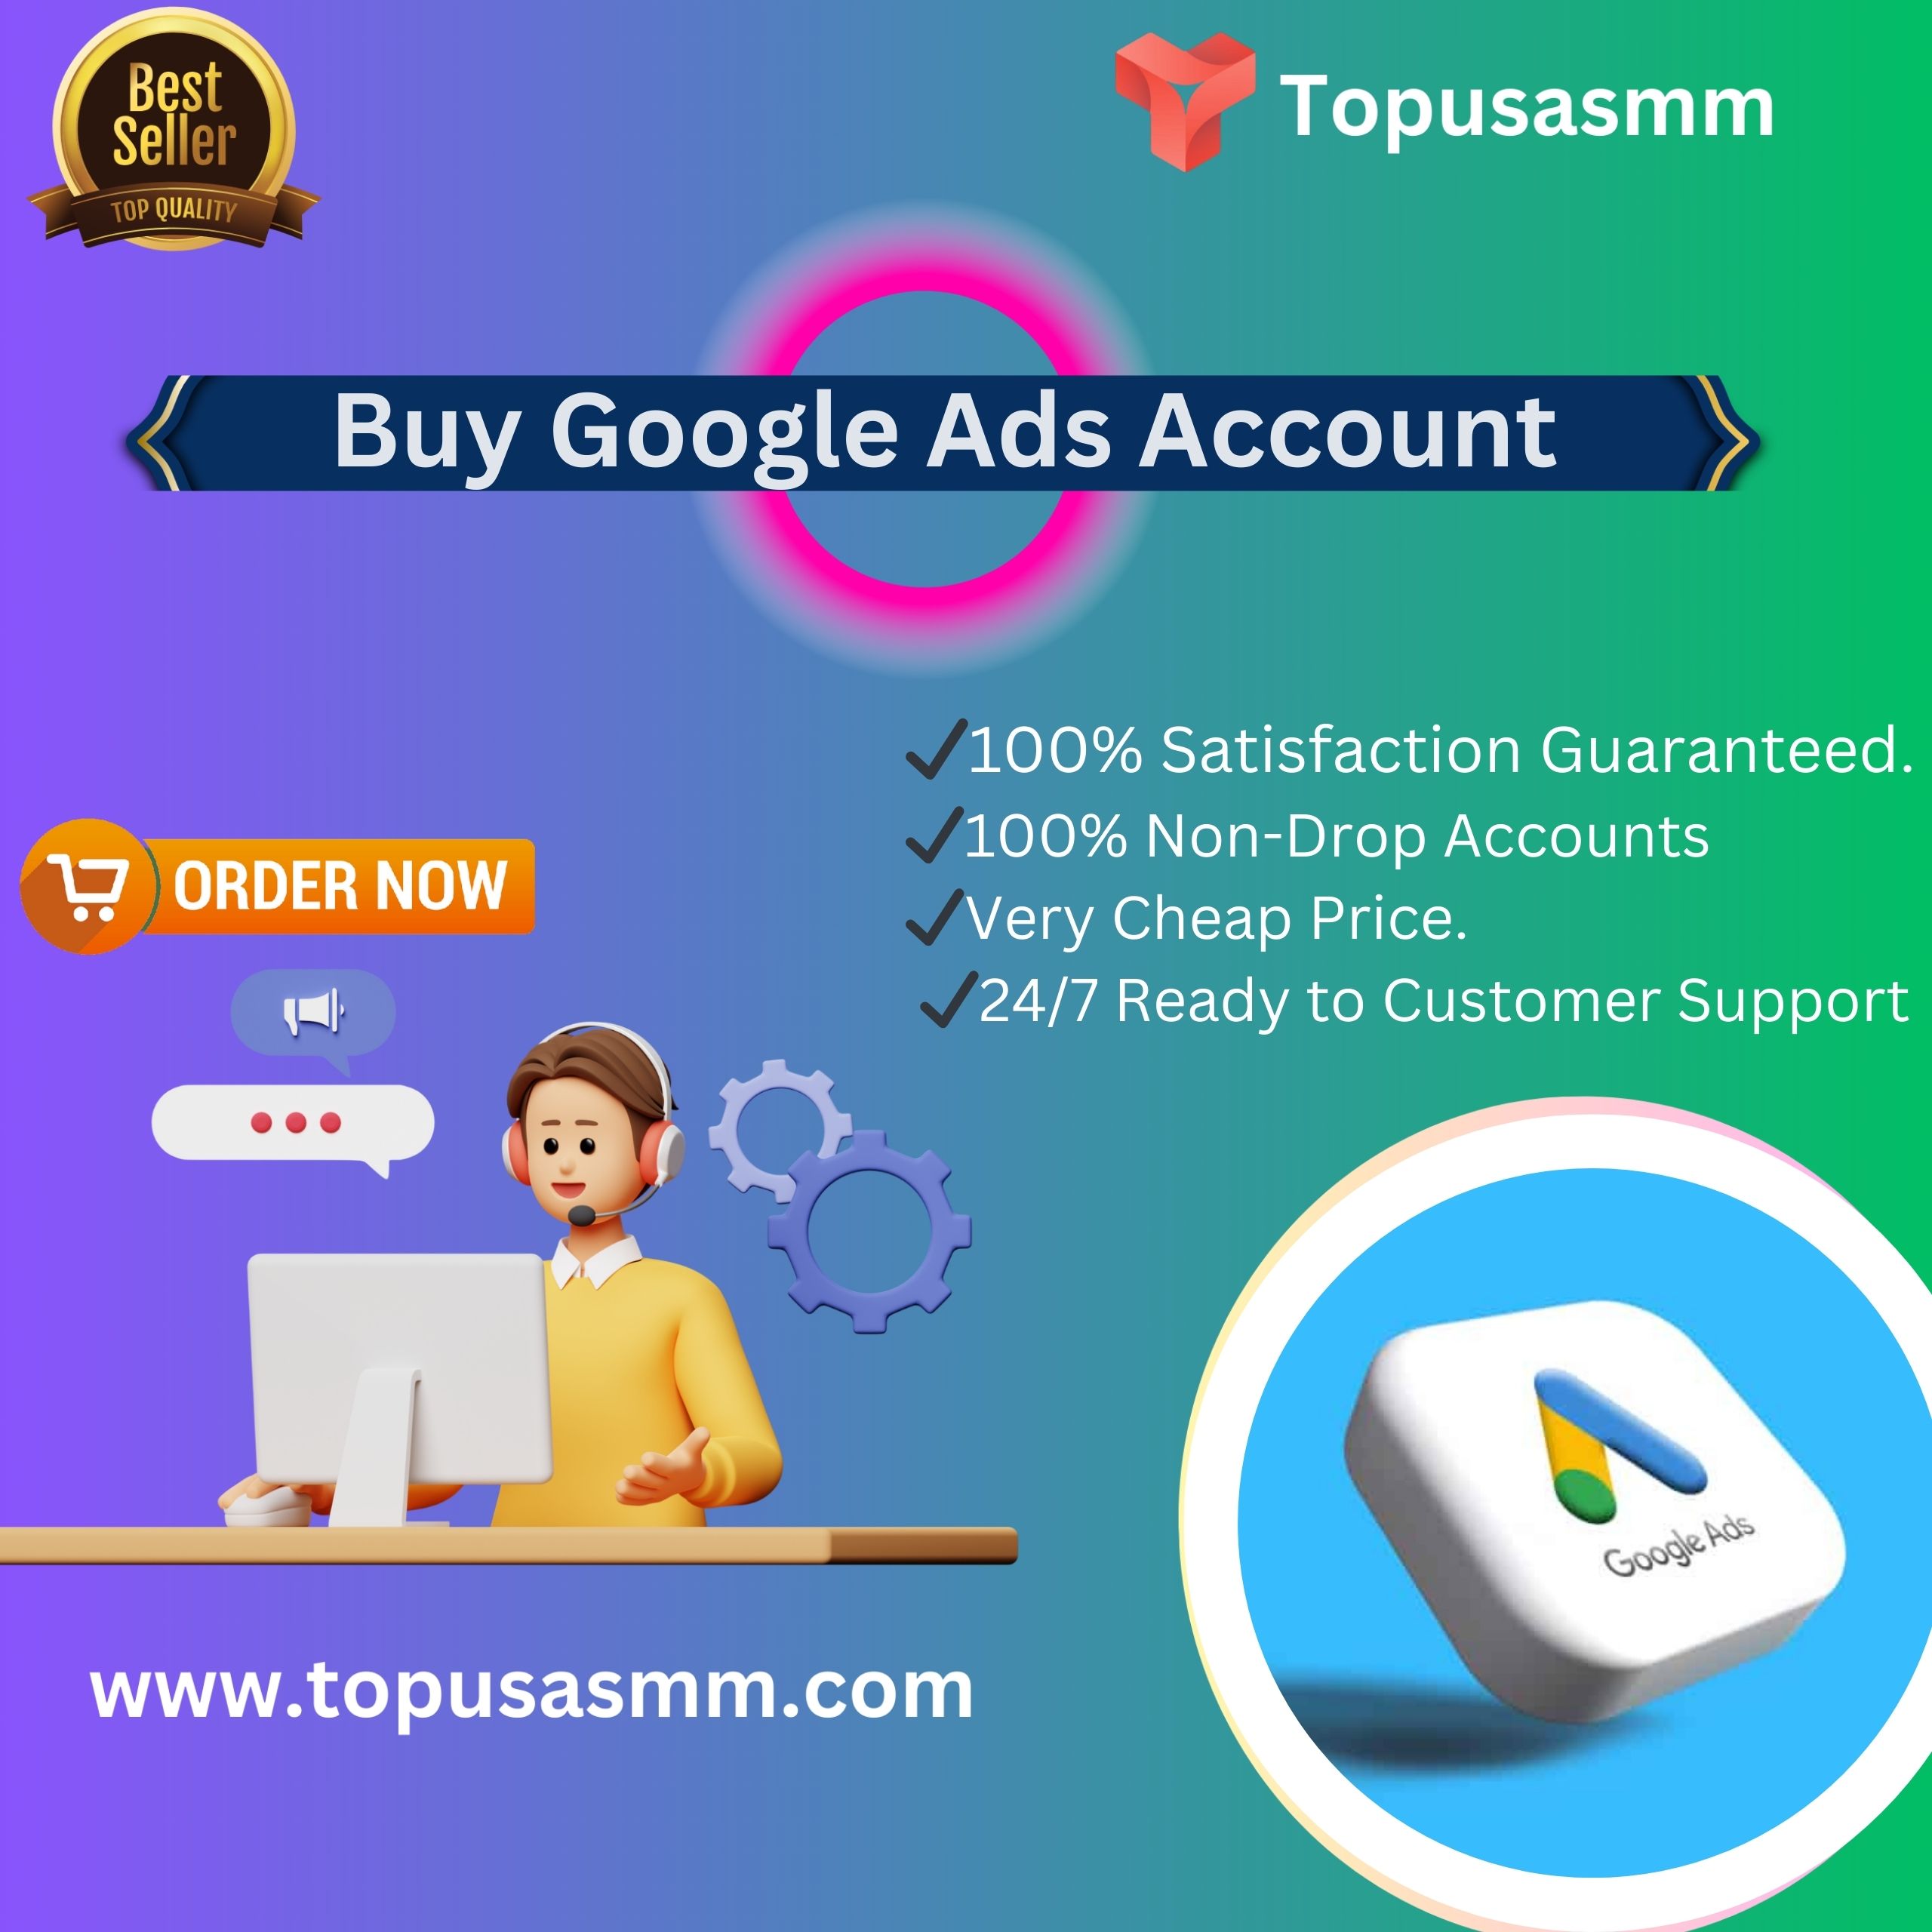 Buy Google Ads Account - Top USA SMM